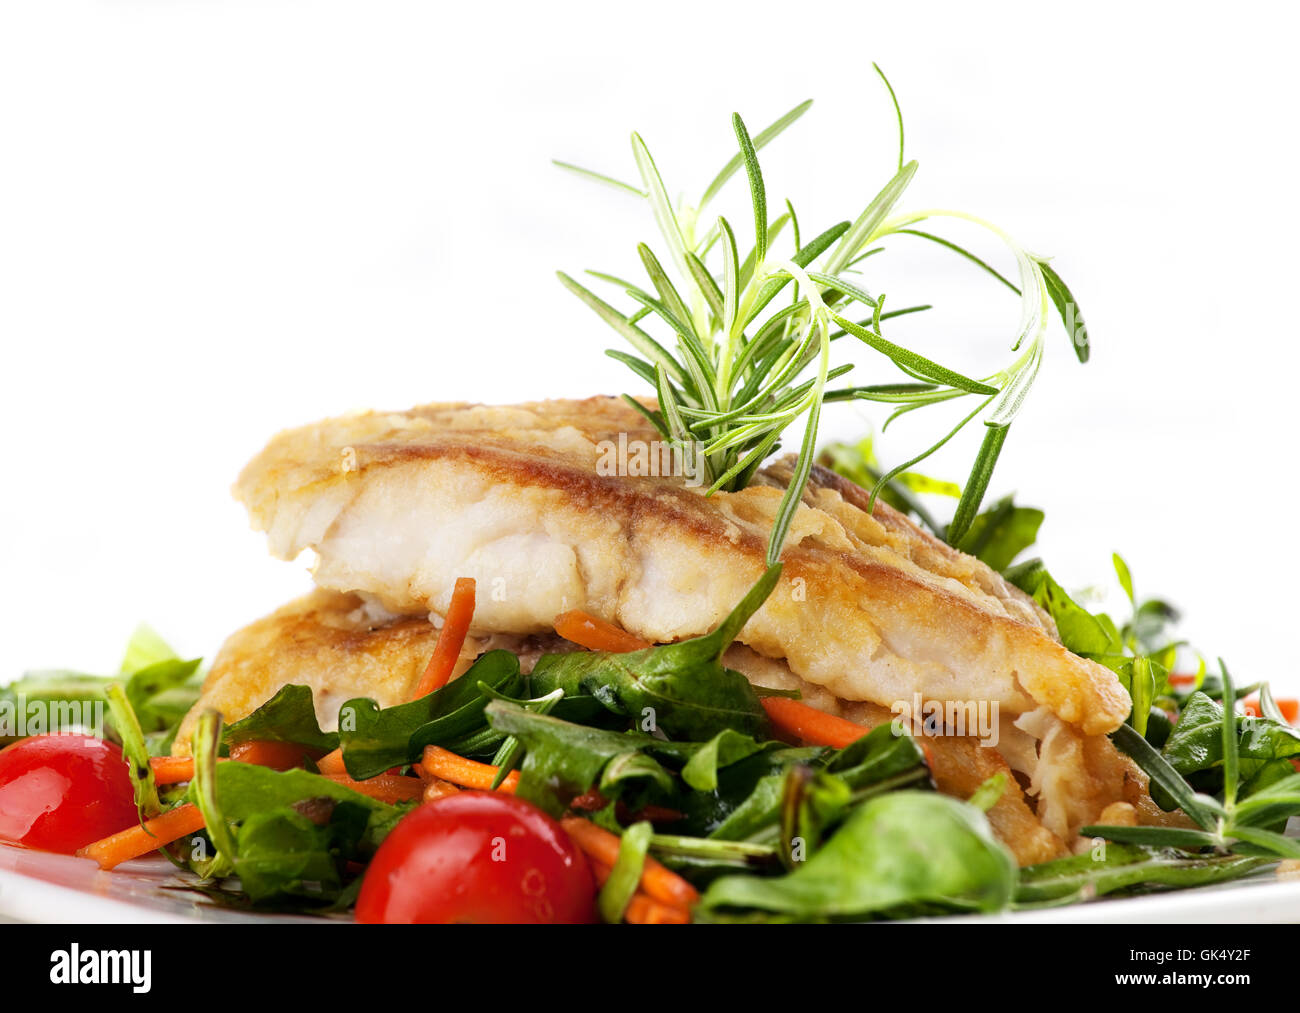 food dish meal Stock Photo - Alamy